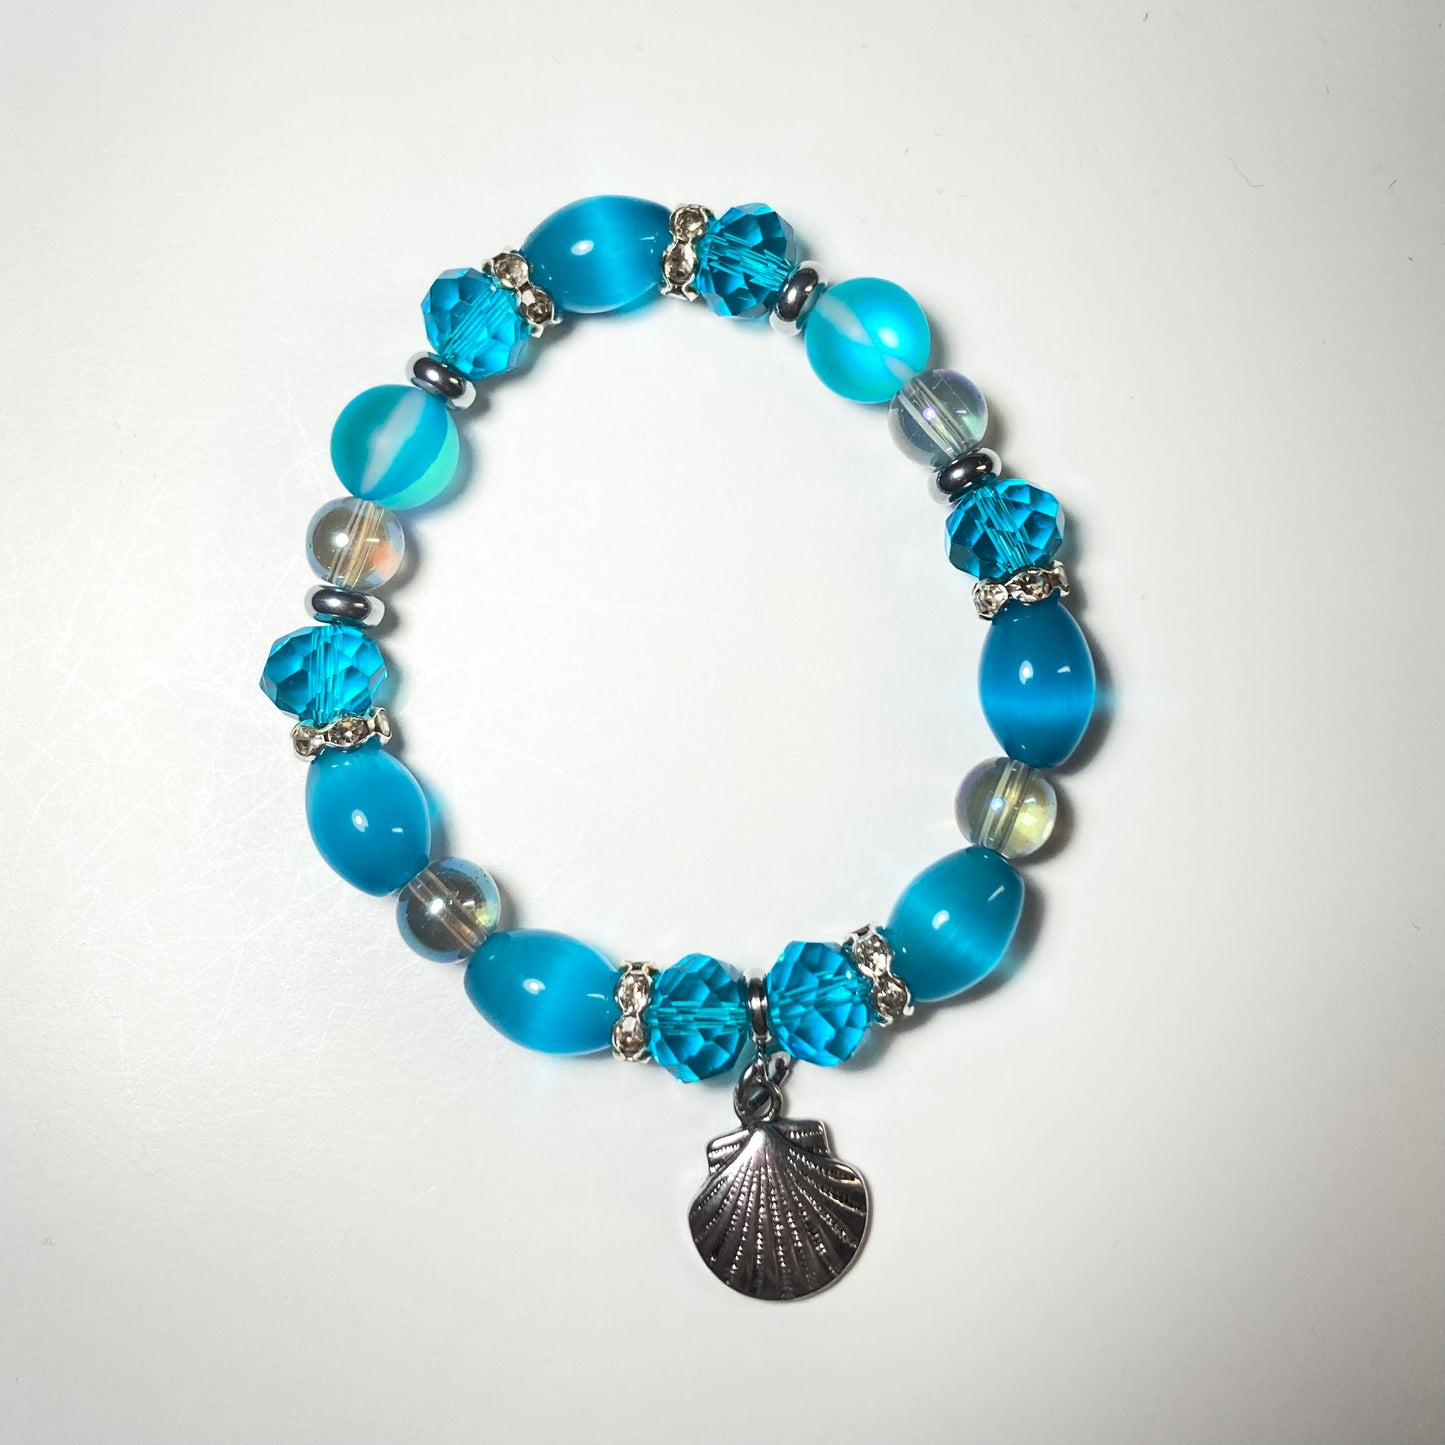 B24-48 - Blue & Silver Stretch Bracelet w/ Shell Charm